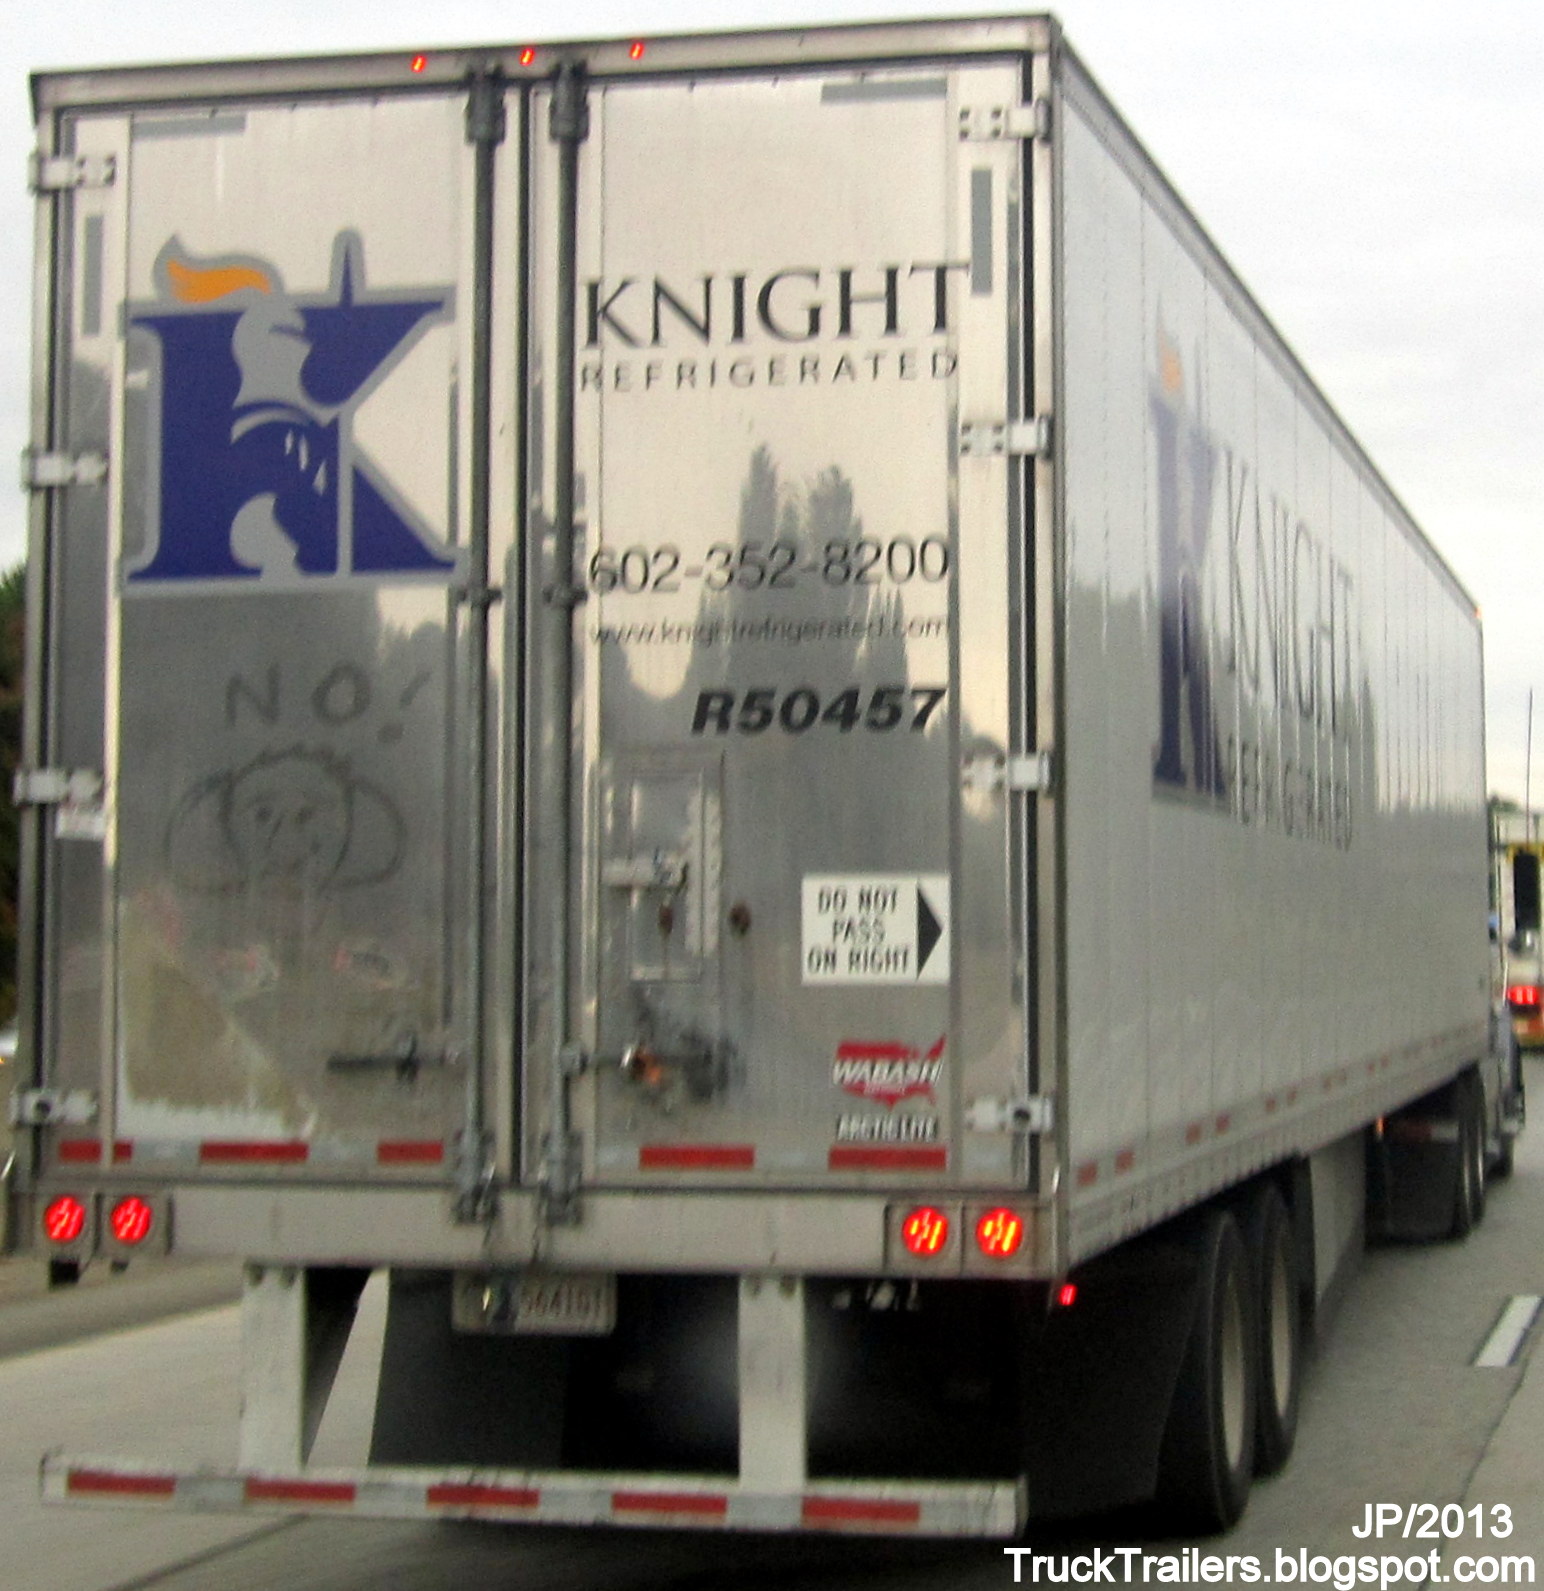 File:Knight Transportation Service Trucking at Flying J Travel Plaza  Bakersfield, (CA).jpg - Wikimedia Commons